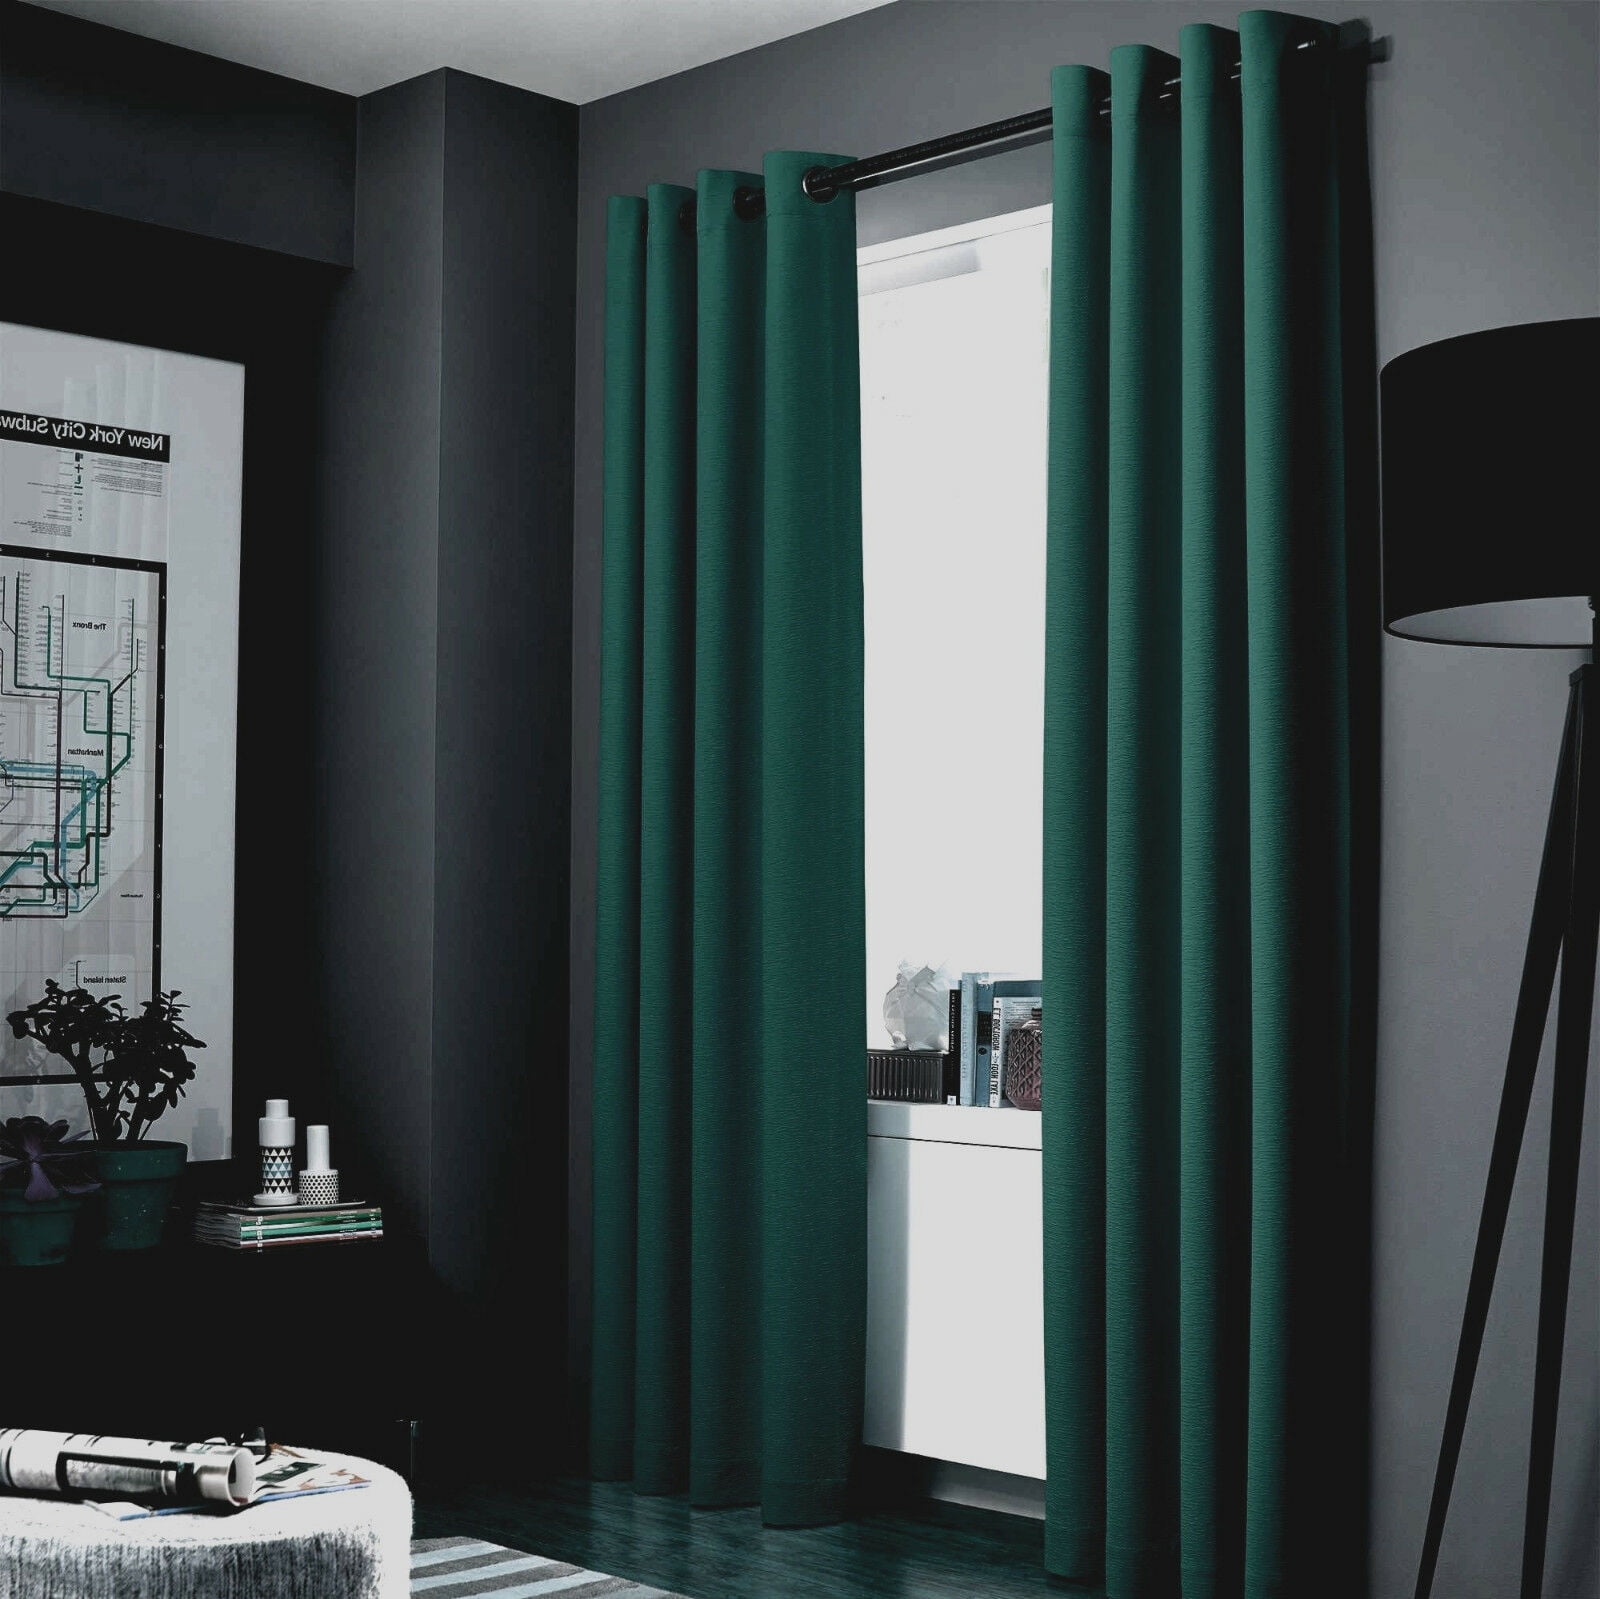 Room Darkening Curtains Panels Microfiber Grommet Window Drapes for Bedroom 